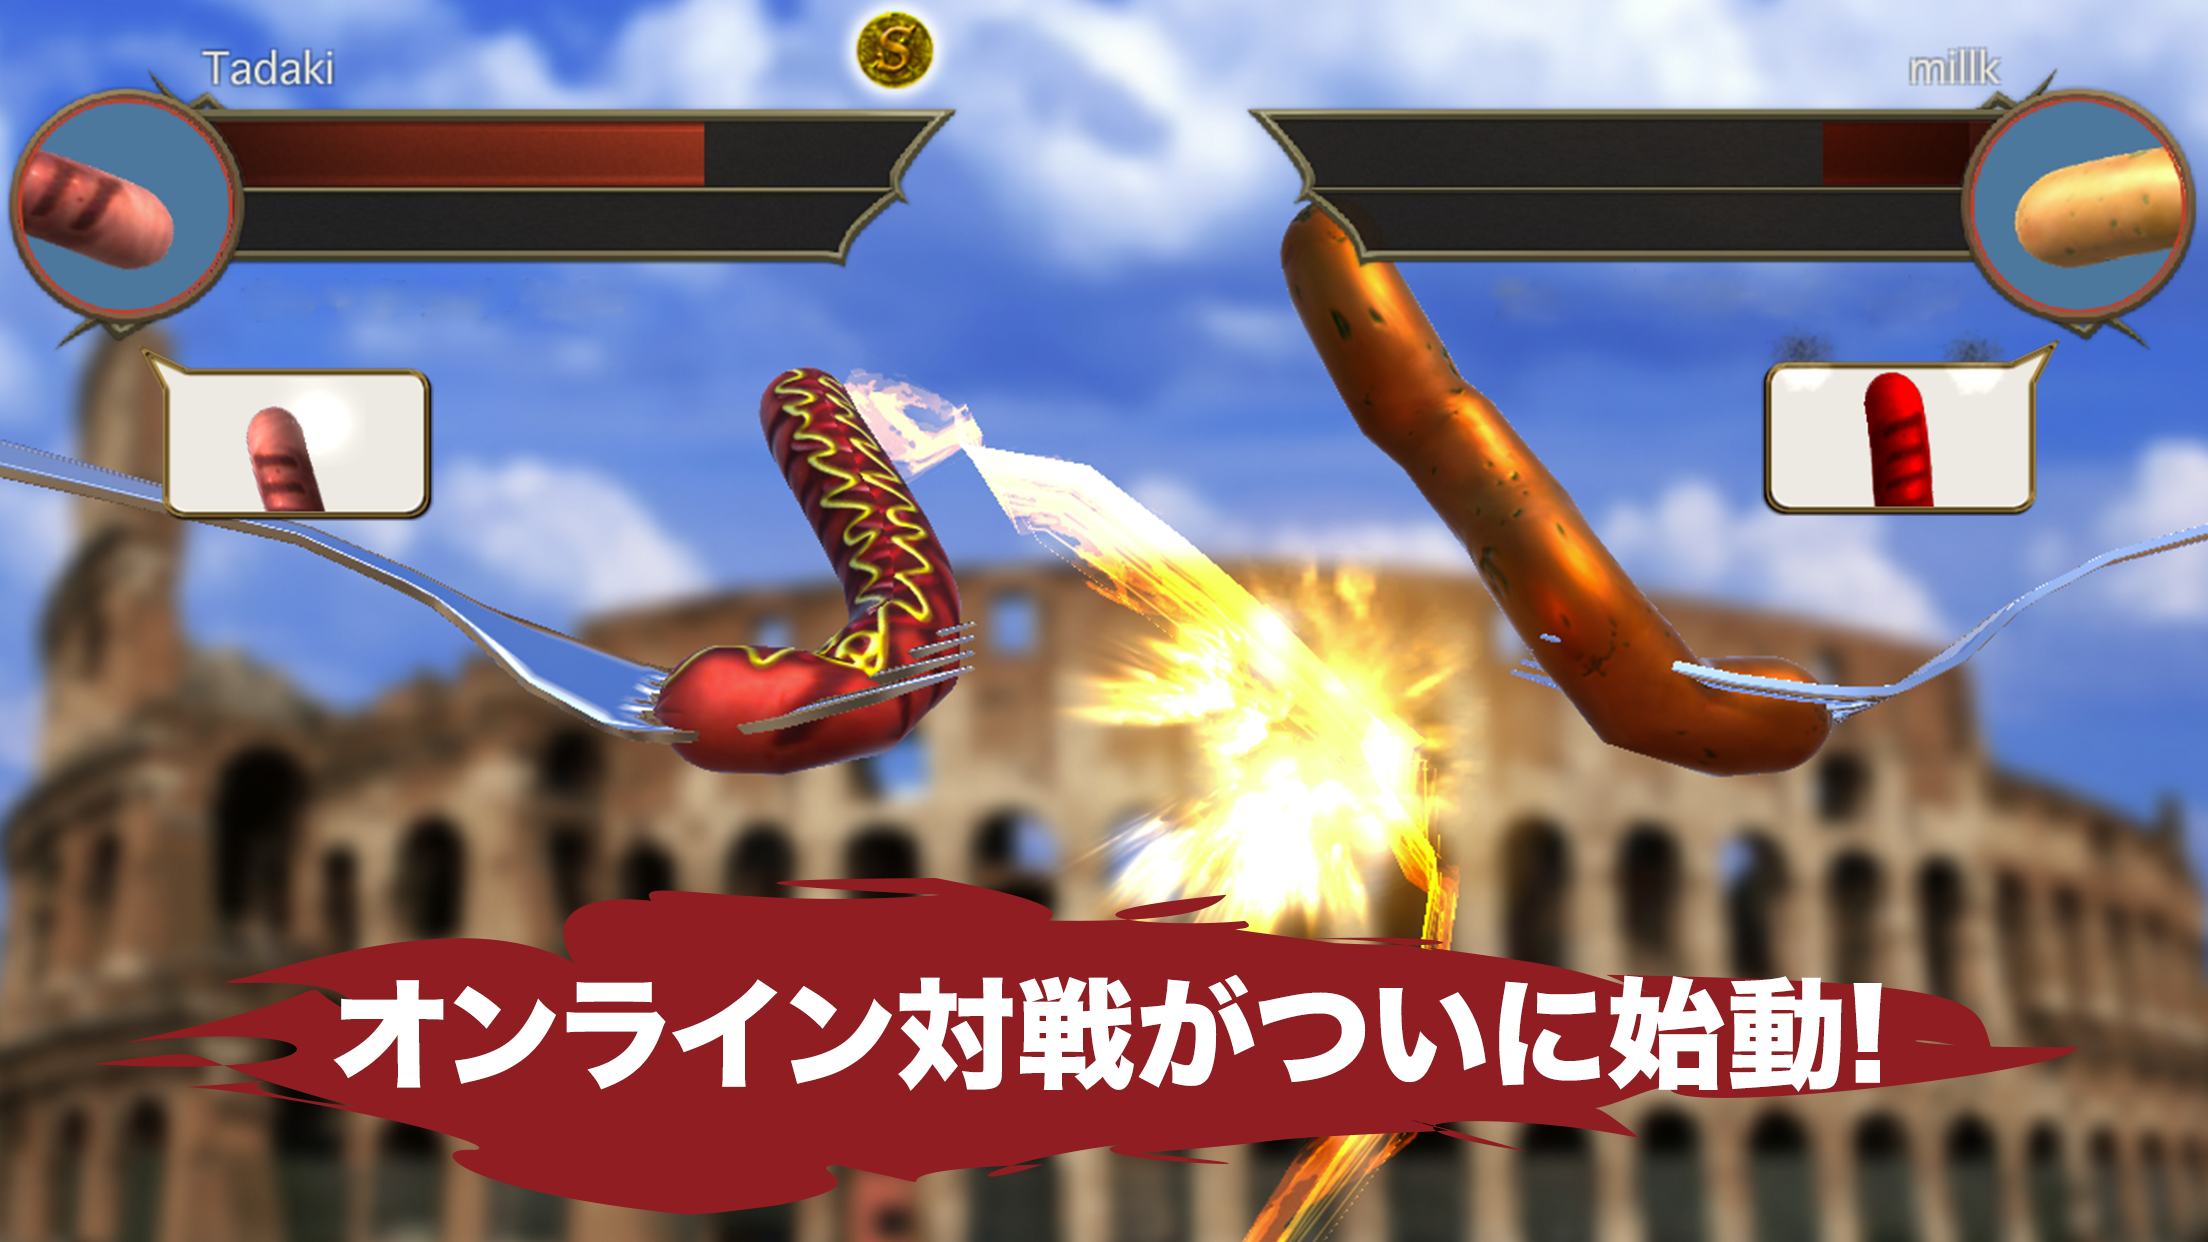 Screenshot 1 of ソーセージレジェンド - オンライン対戦格闘ゲーム 2.3.1